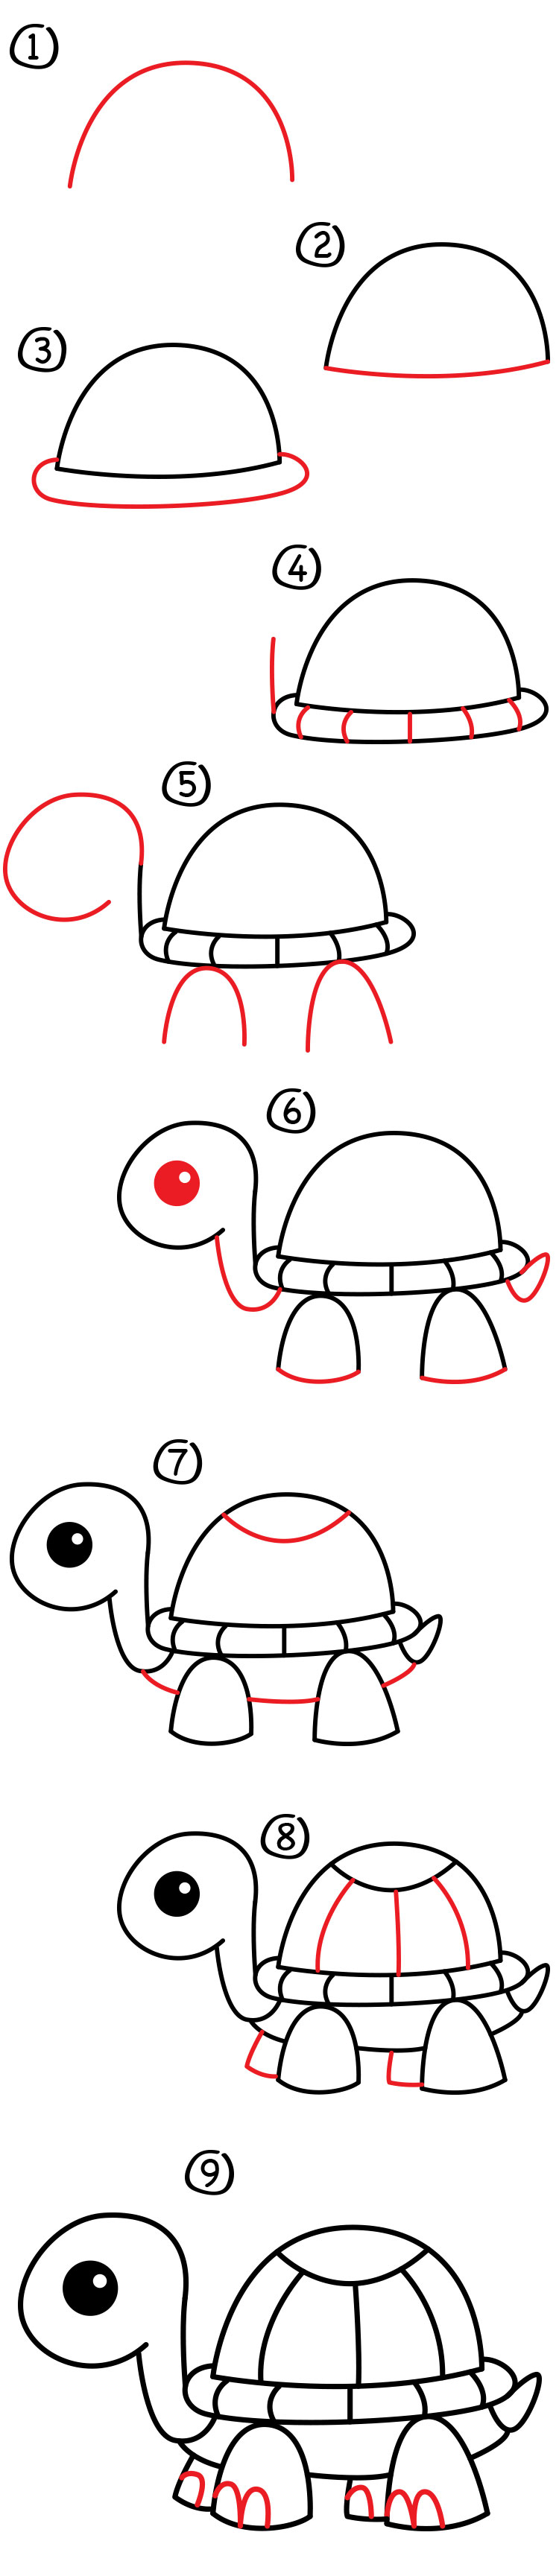 How To Draw A Cartoon Turtle - Art For Kids Hub